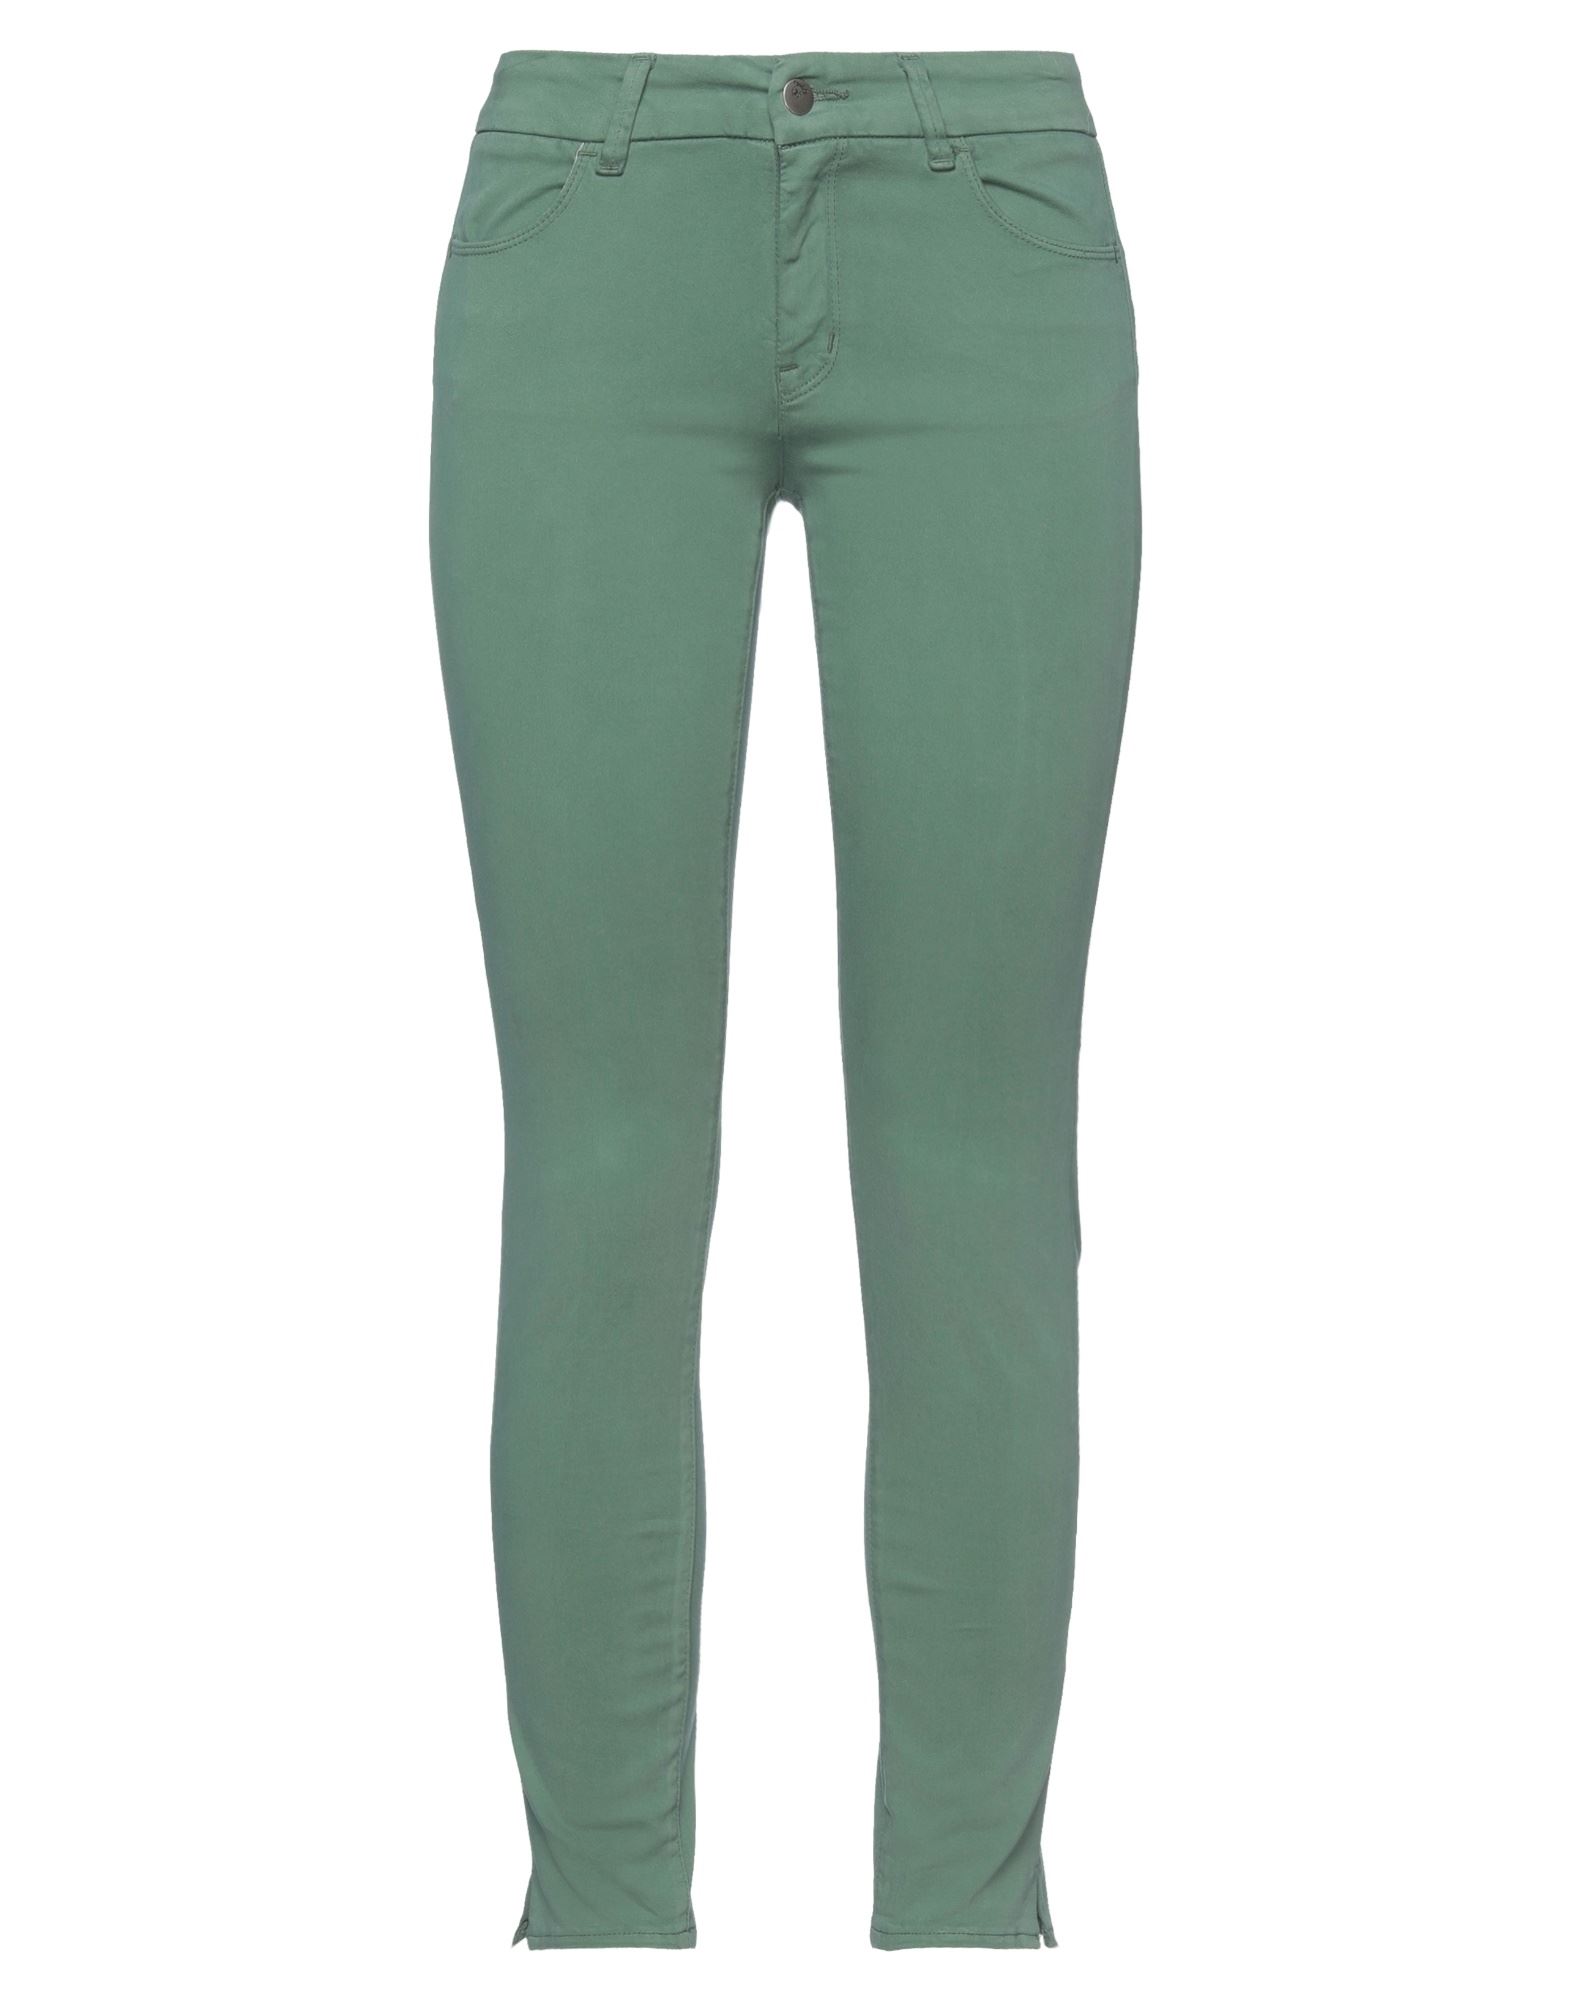 Cigala's Pants In Green